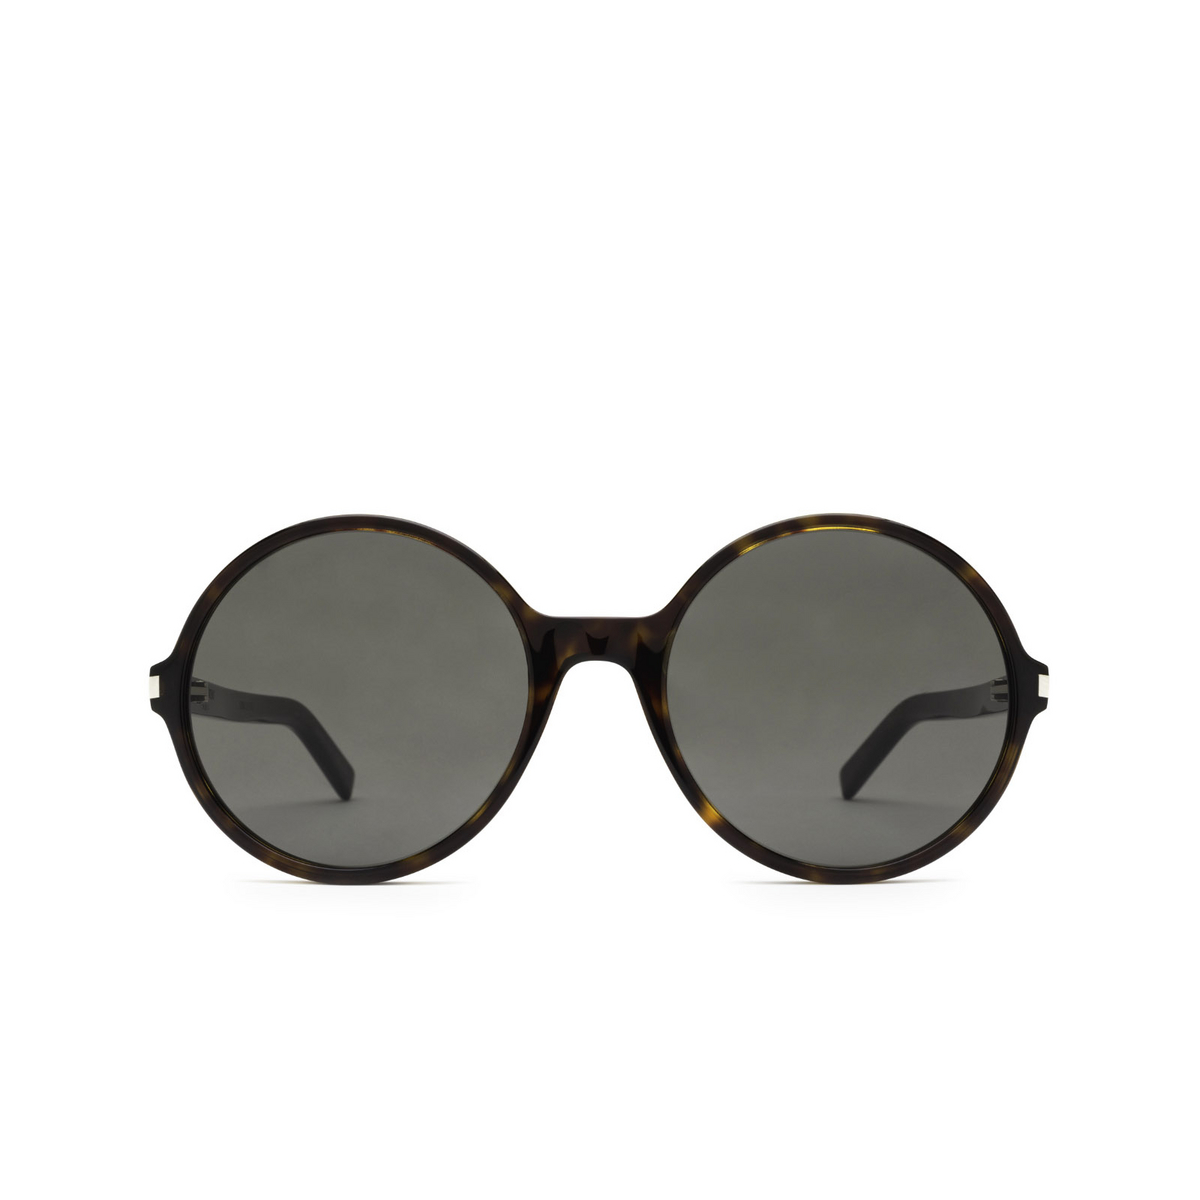 Saint Laurent® Round Sunglasses: SL 450 color Dark Havana 002 - front view.